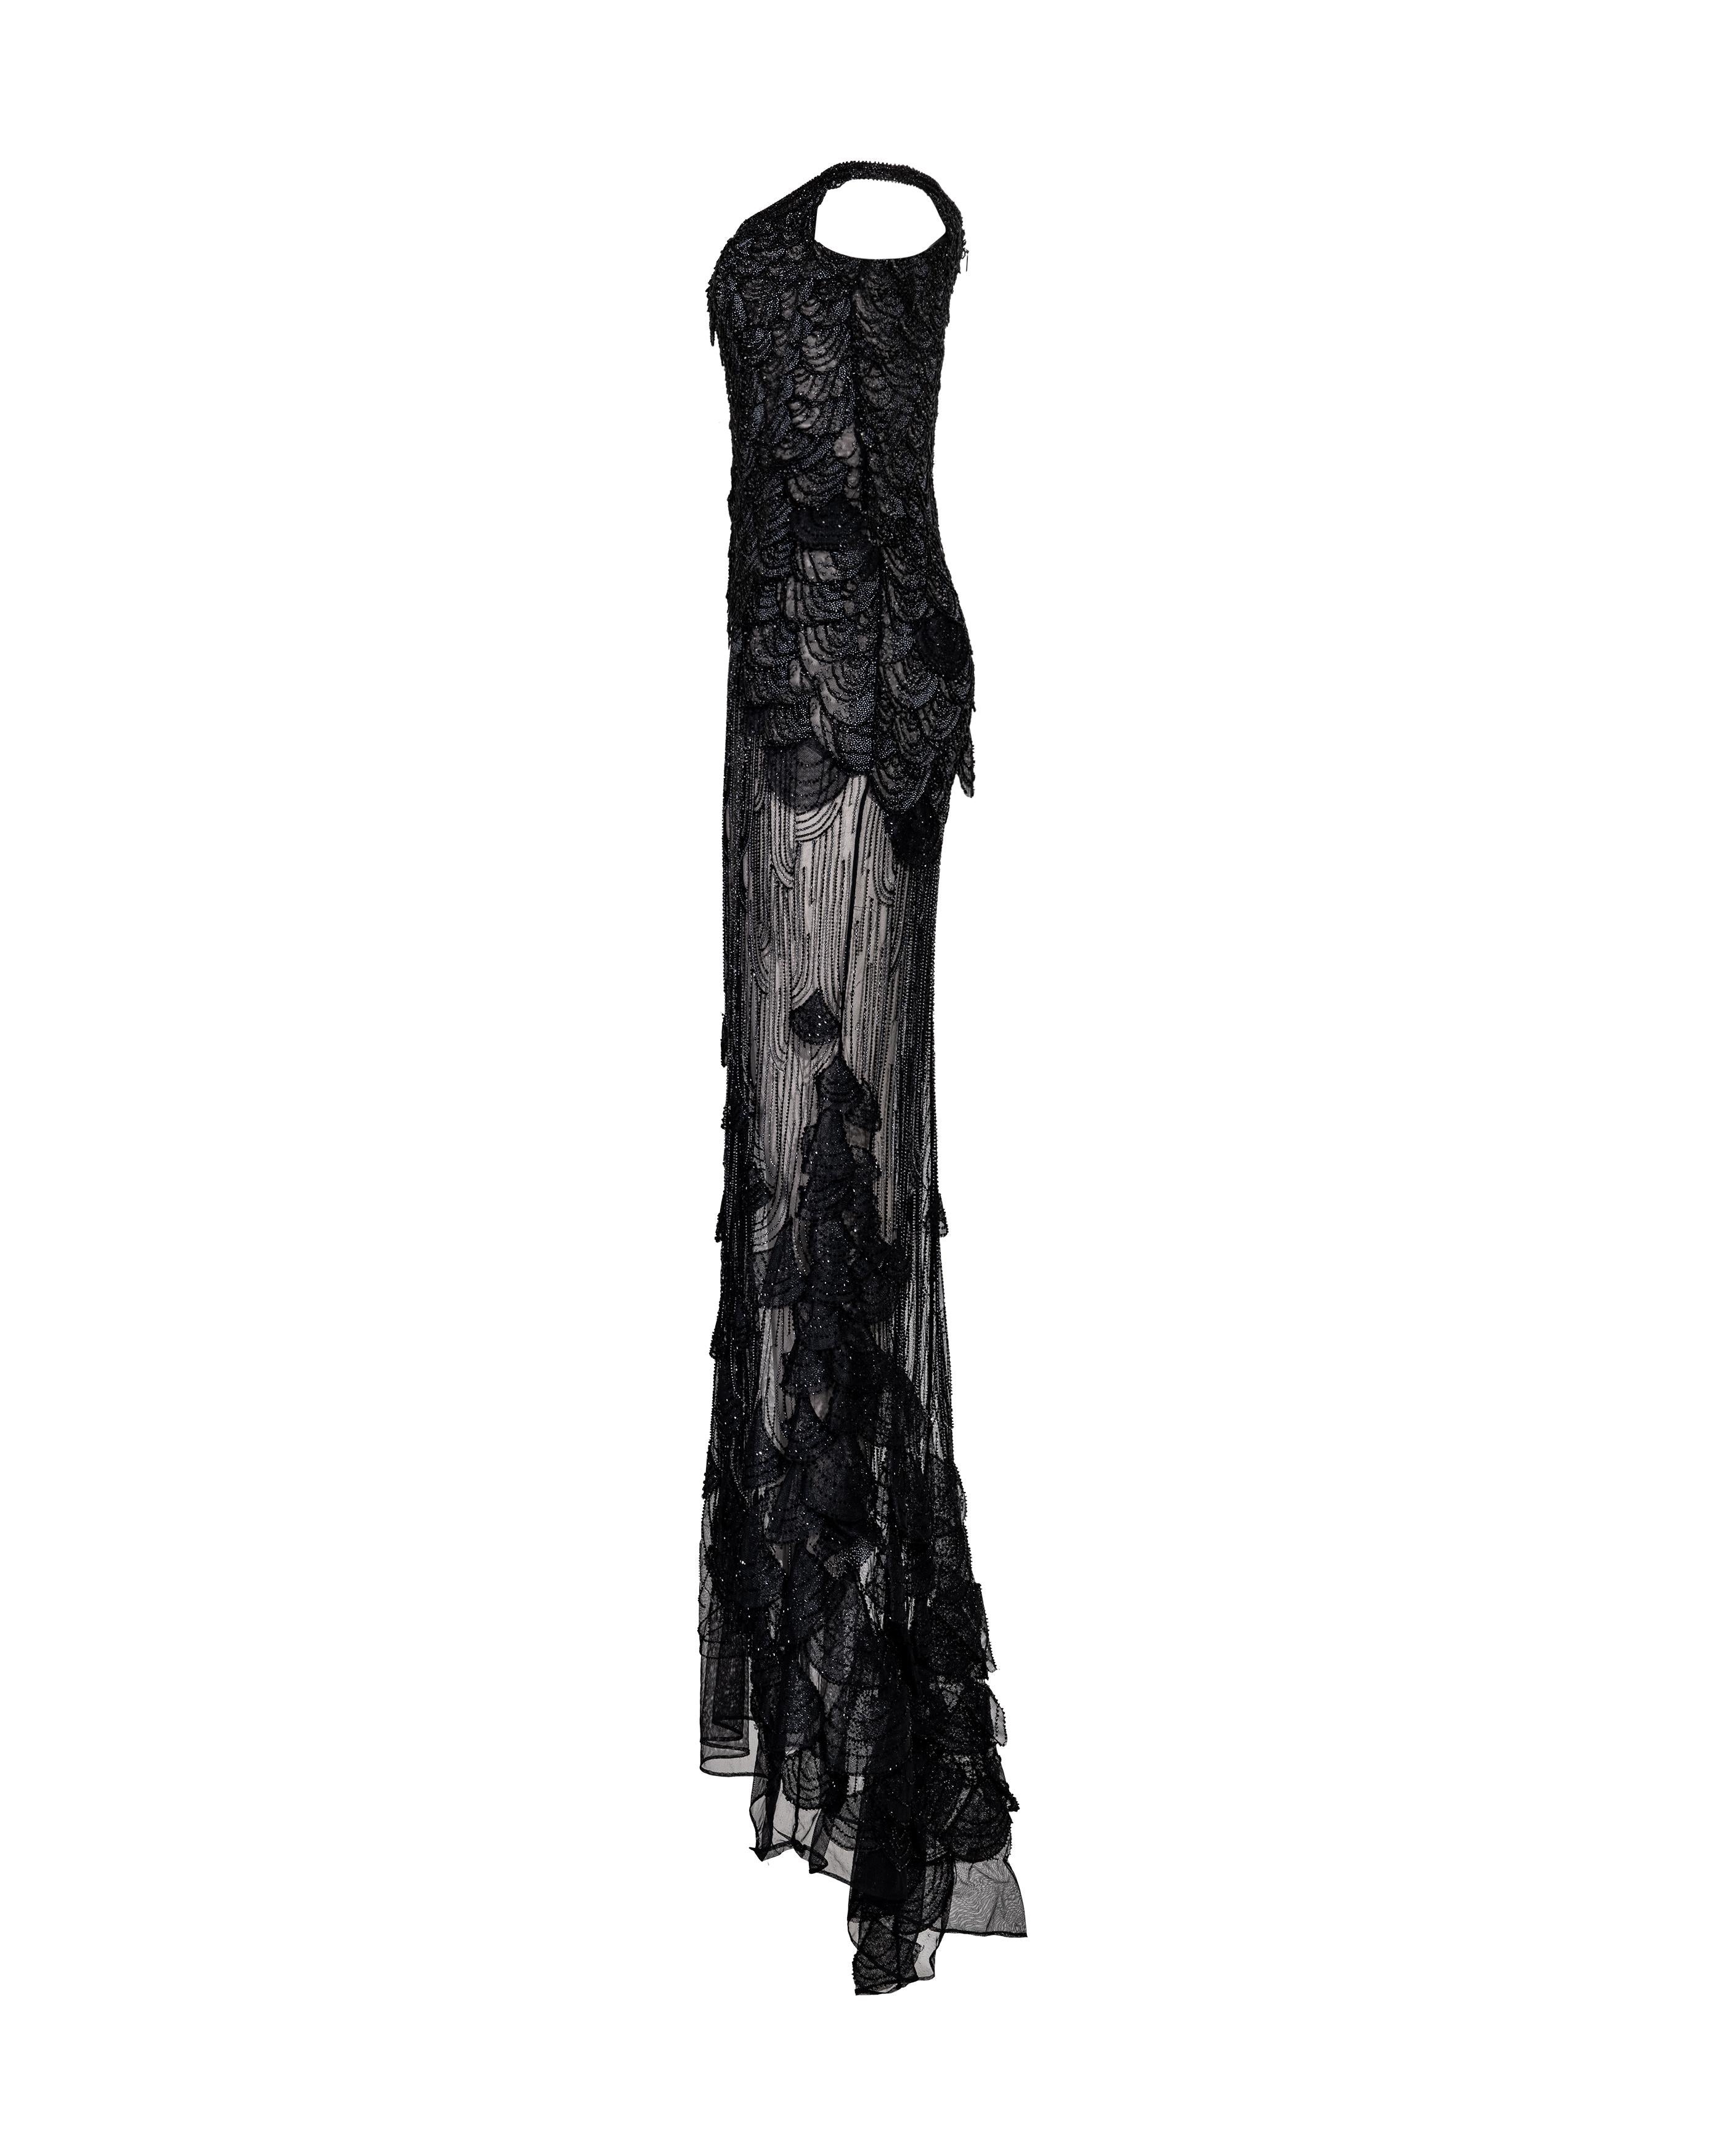 Women's S/S 1999 Atelier Versace Haute Couture Black Embellished Off-Shoulder Gown